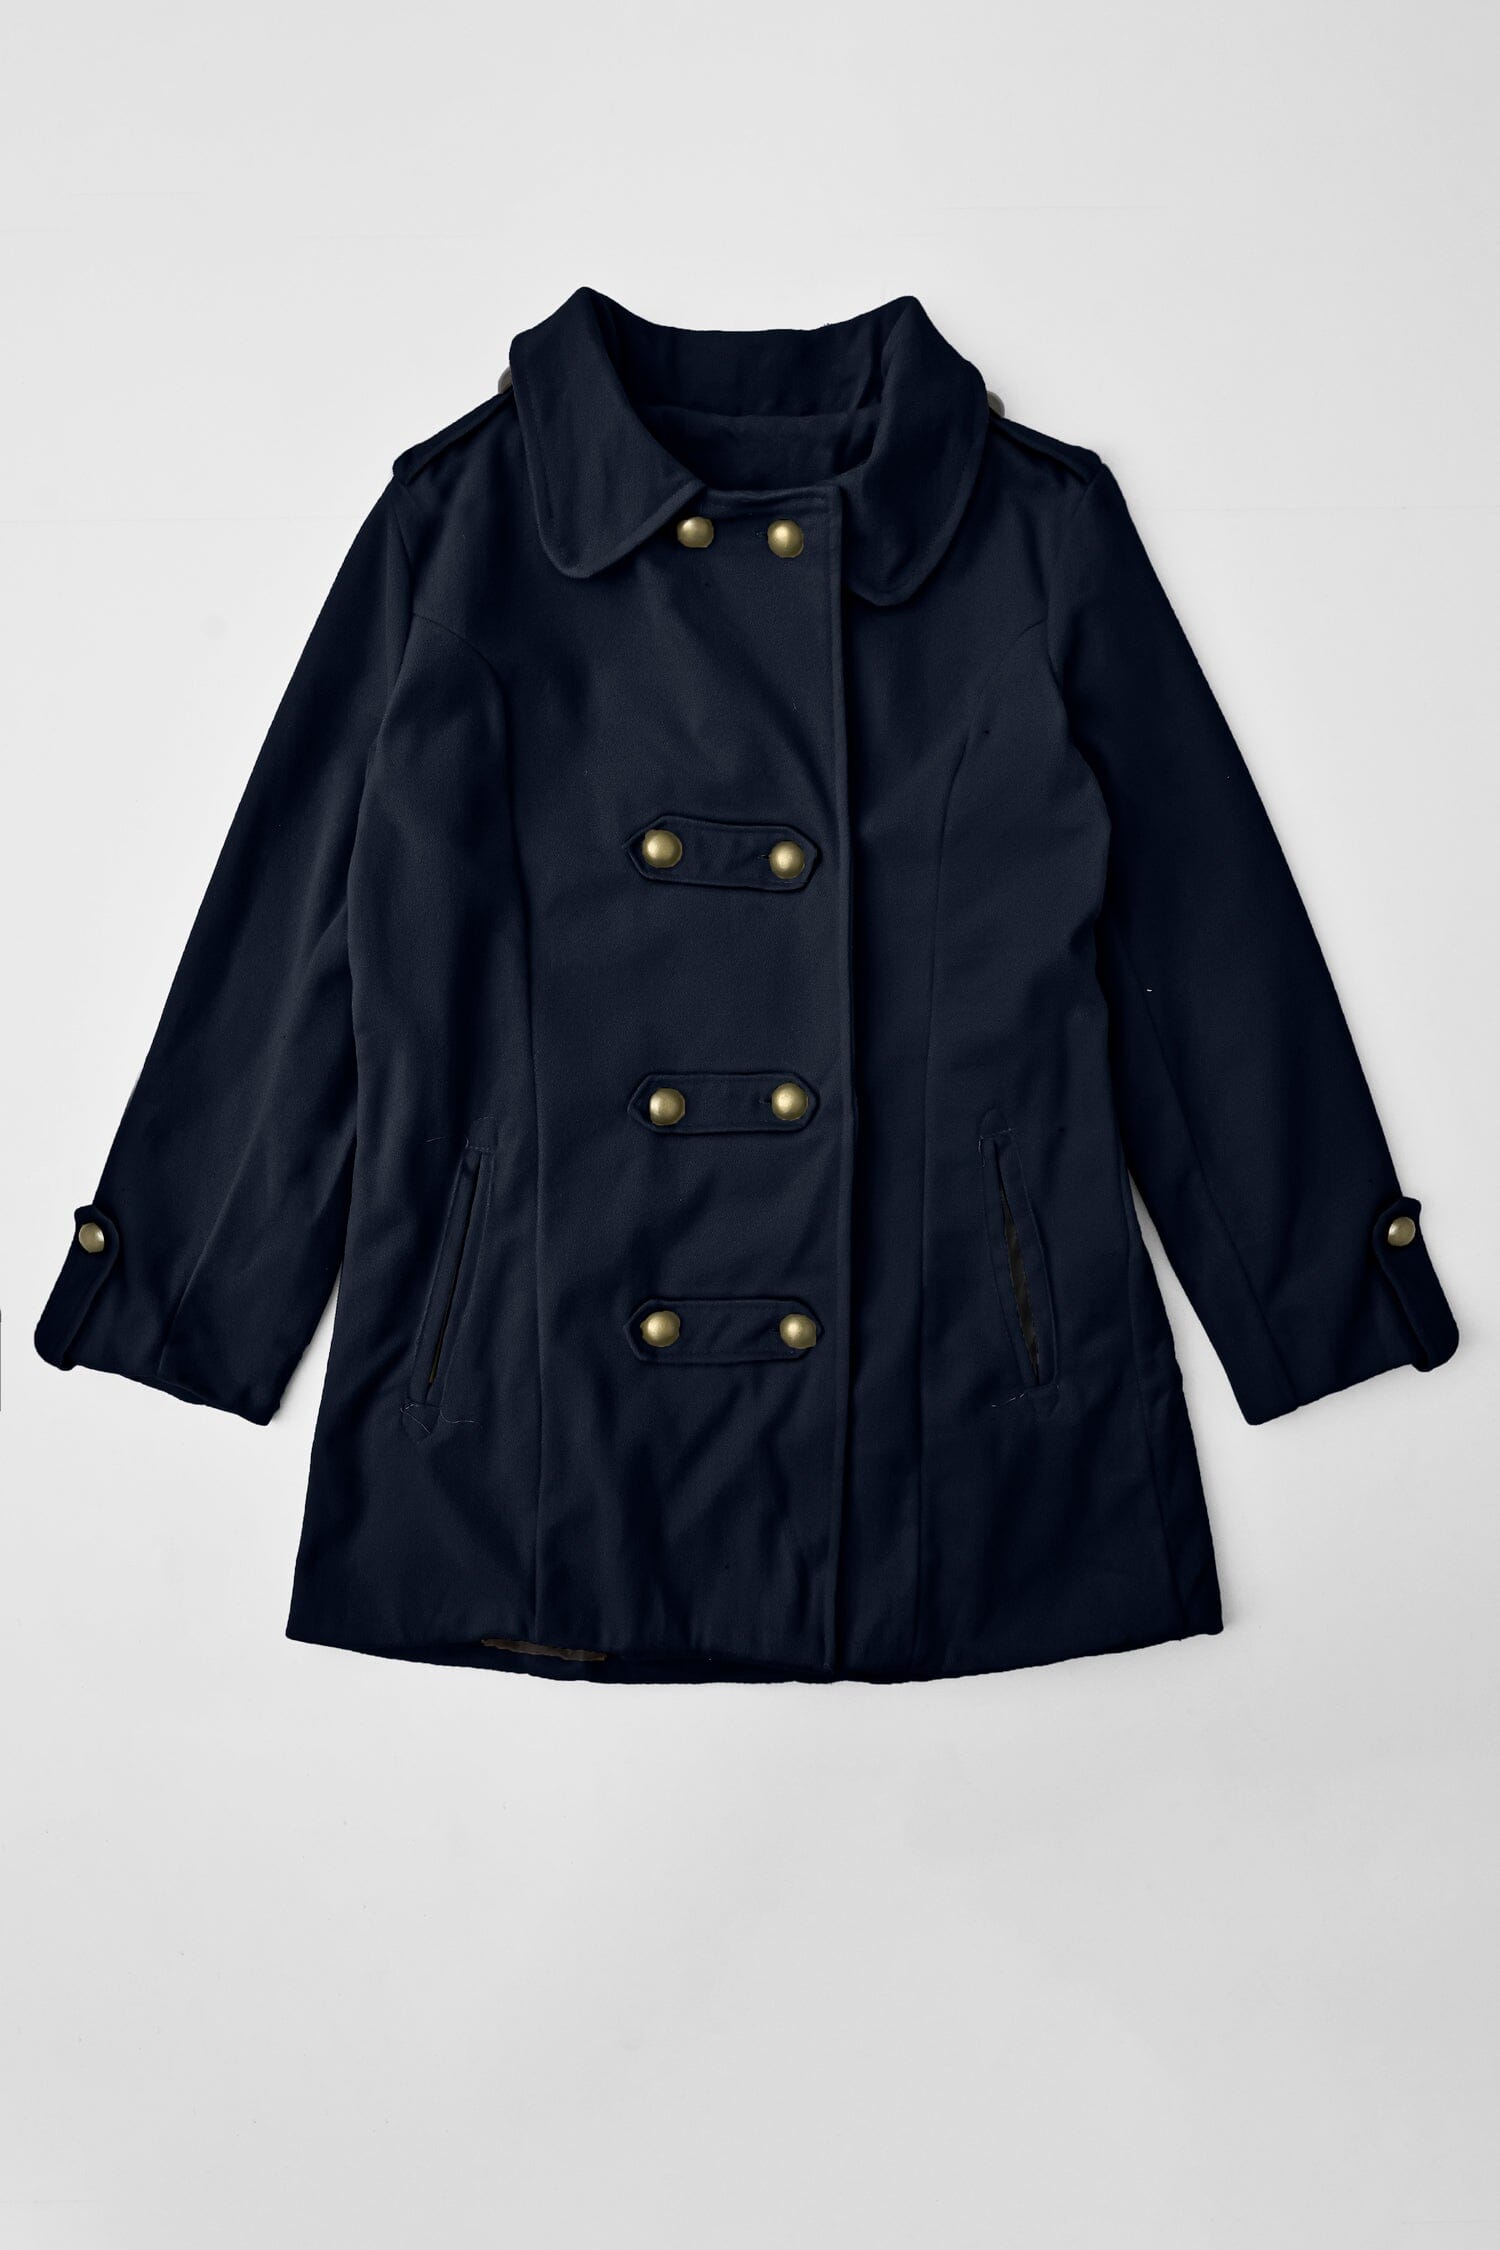 Women's Winter Outwear British Style Long Coat Women's Jacket First Choice 